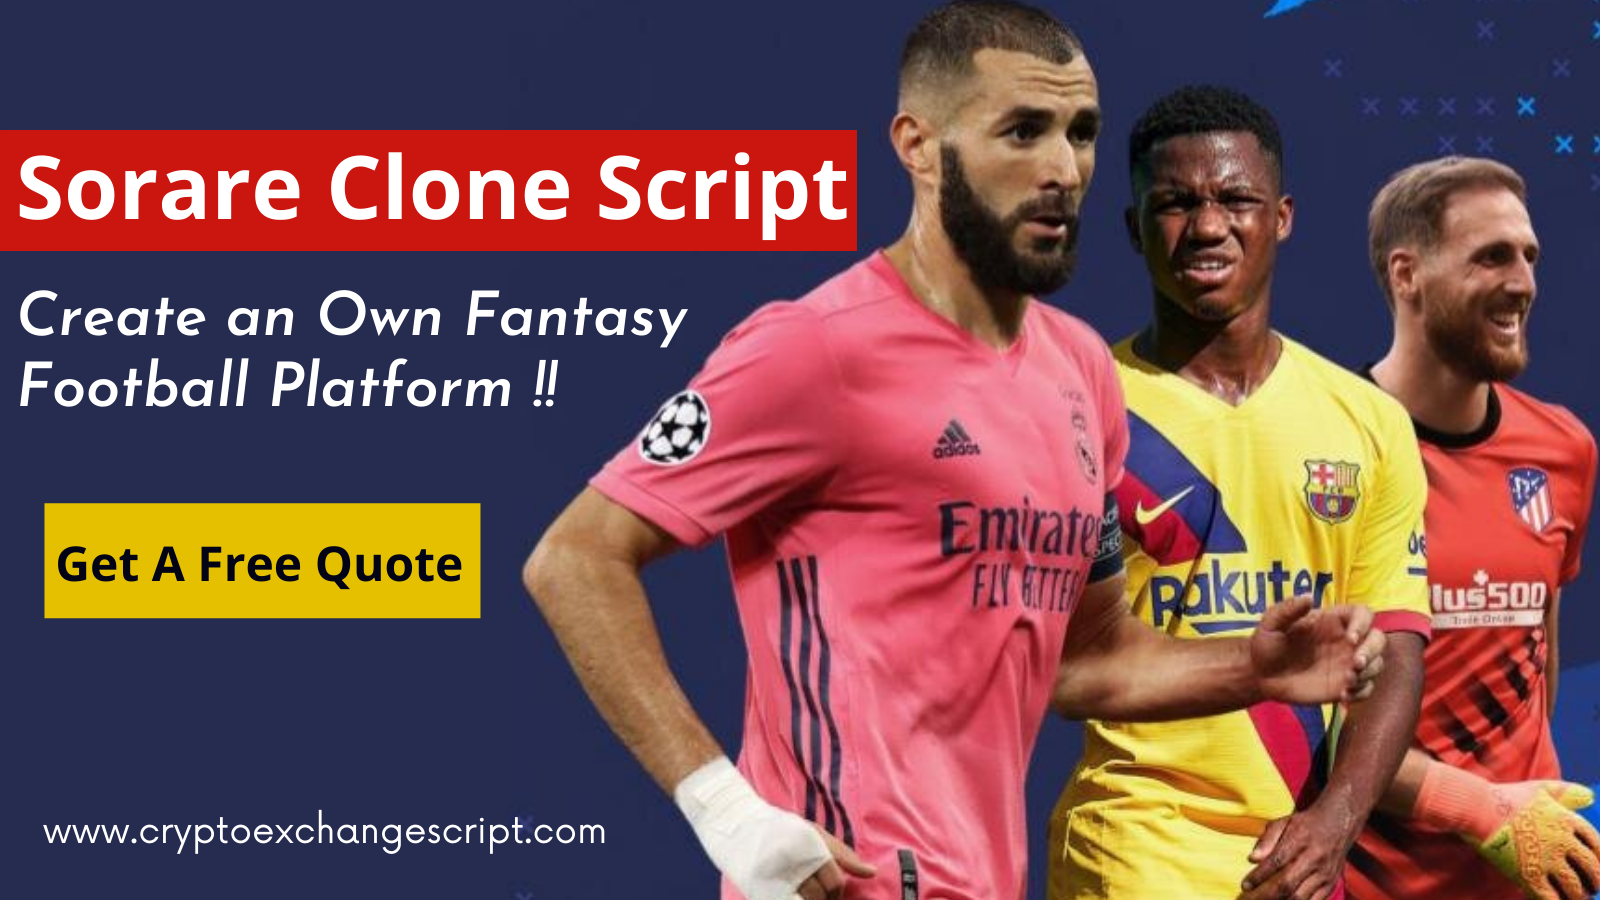 Sorare Clone Script - To Start NFT Based Football Marketplace on Ethereum